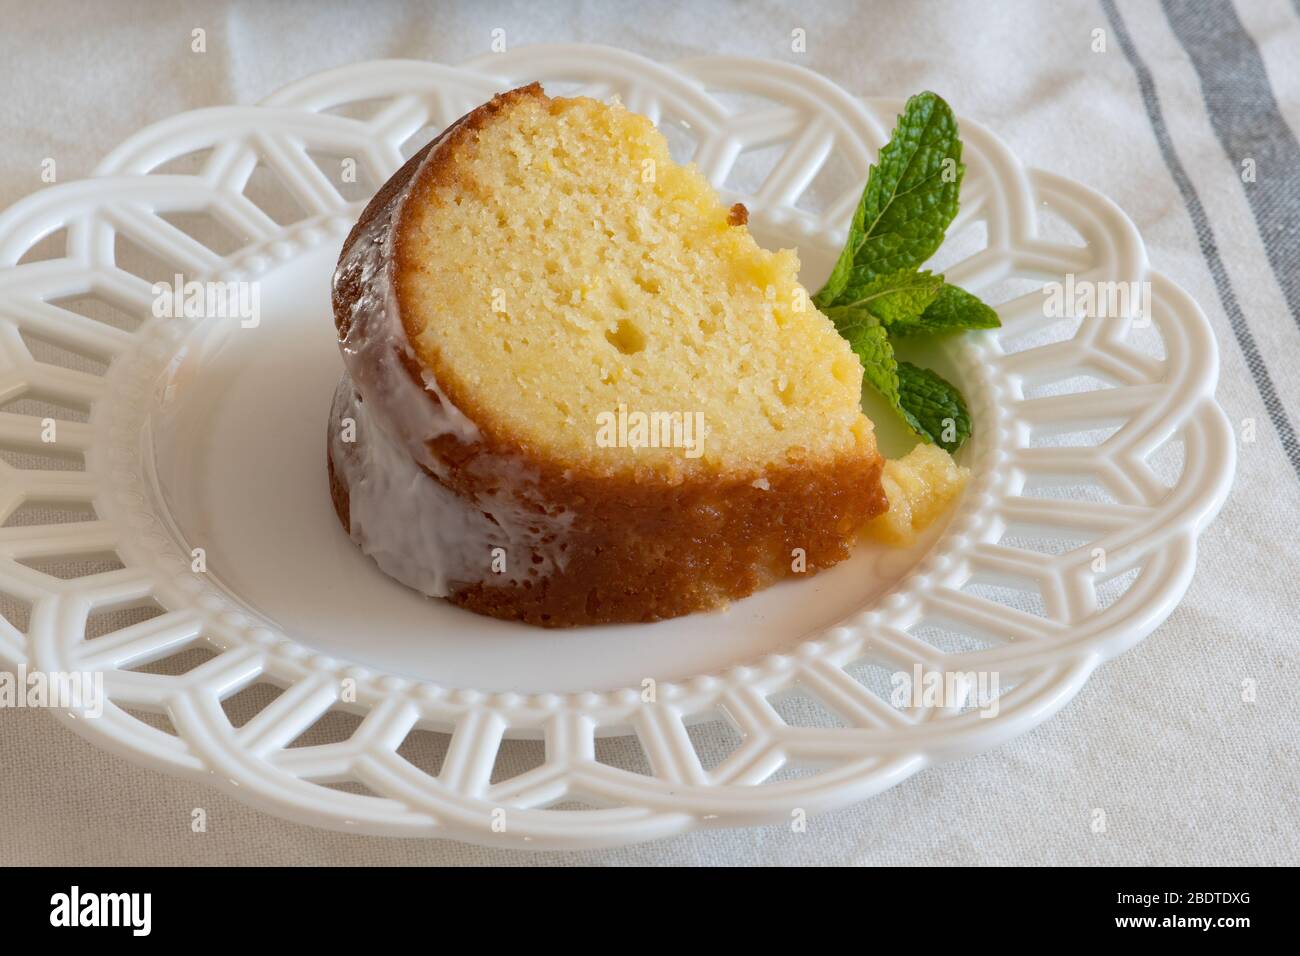 A slice of moist Lemon Ricotta Bundt Cake on a white decorative plate with a mint leaf garnish. Stock Photo